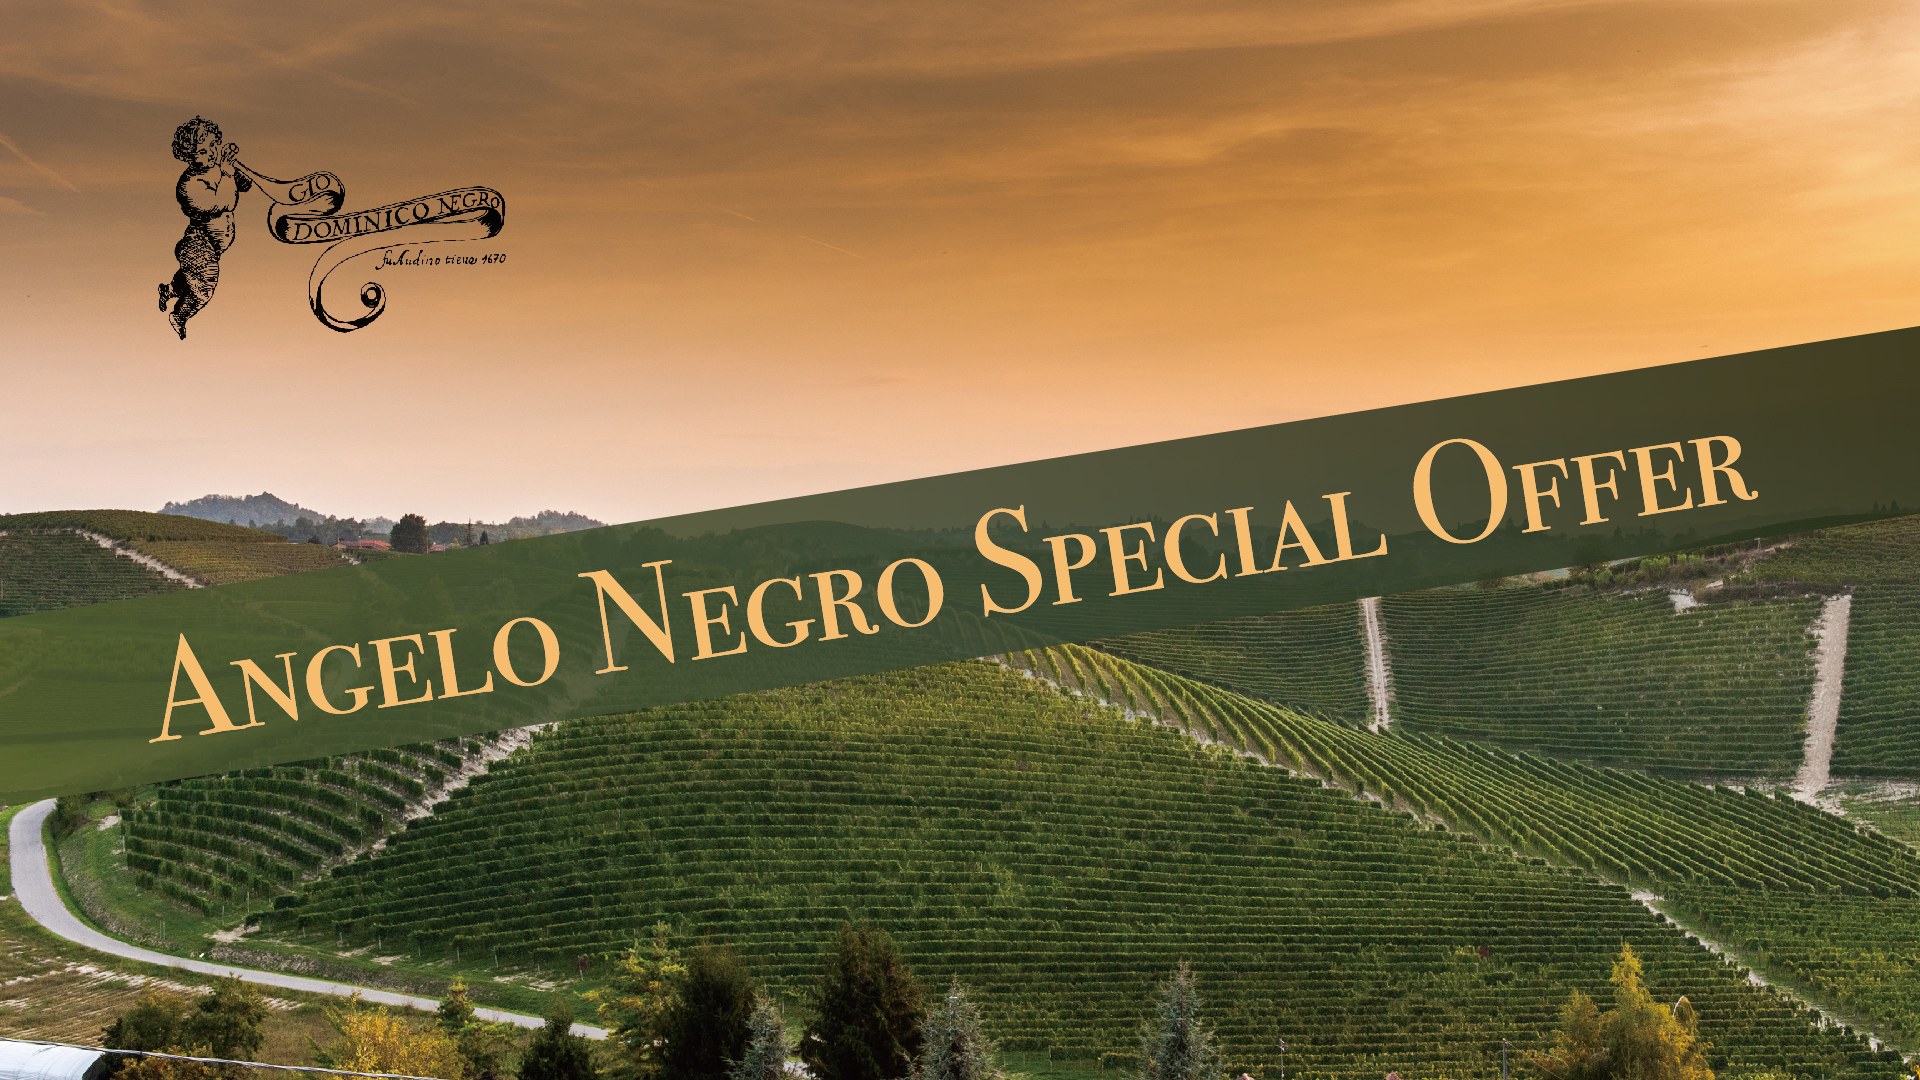 Angelo Negro Special Offer banner.jpg | 1677kb | 1920x1080